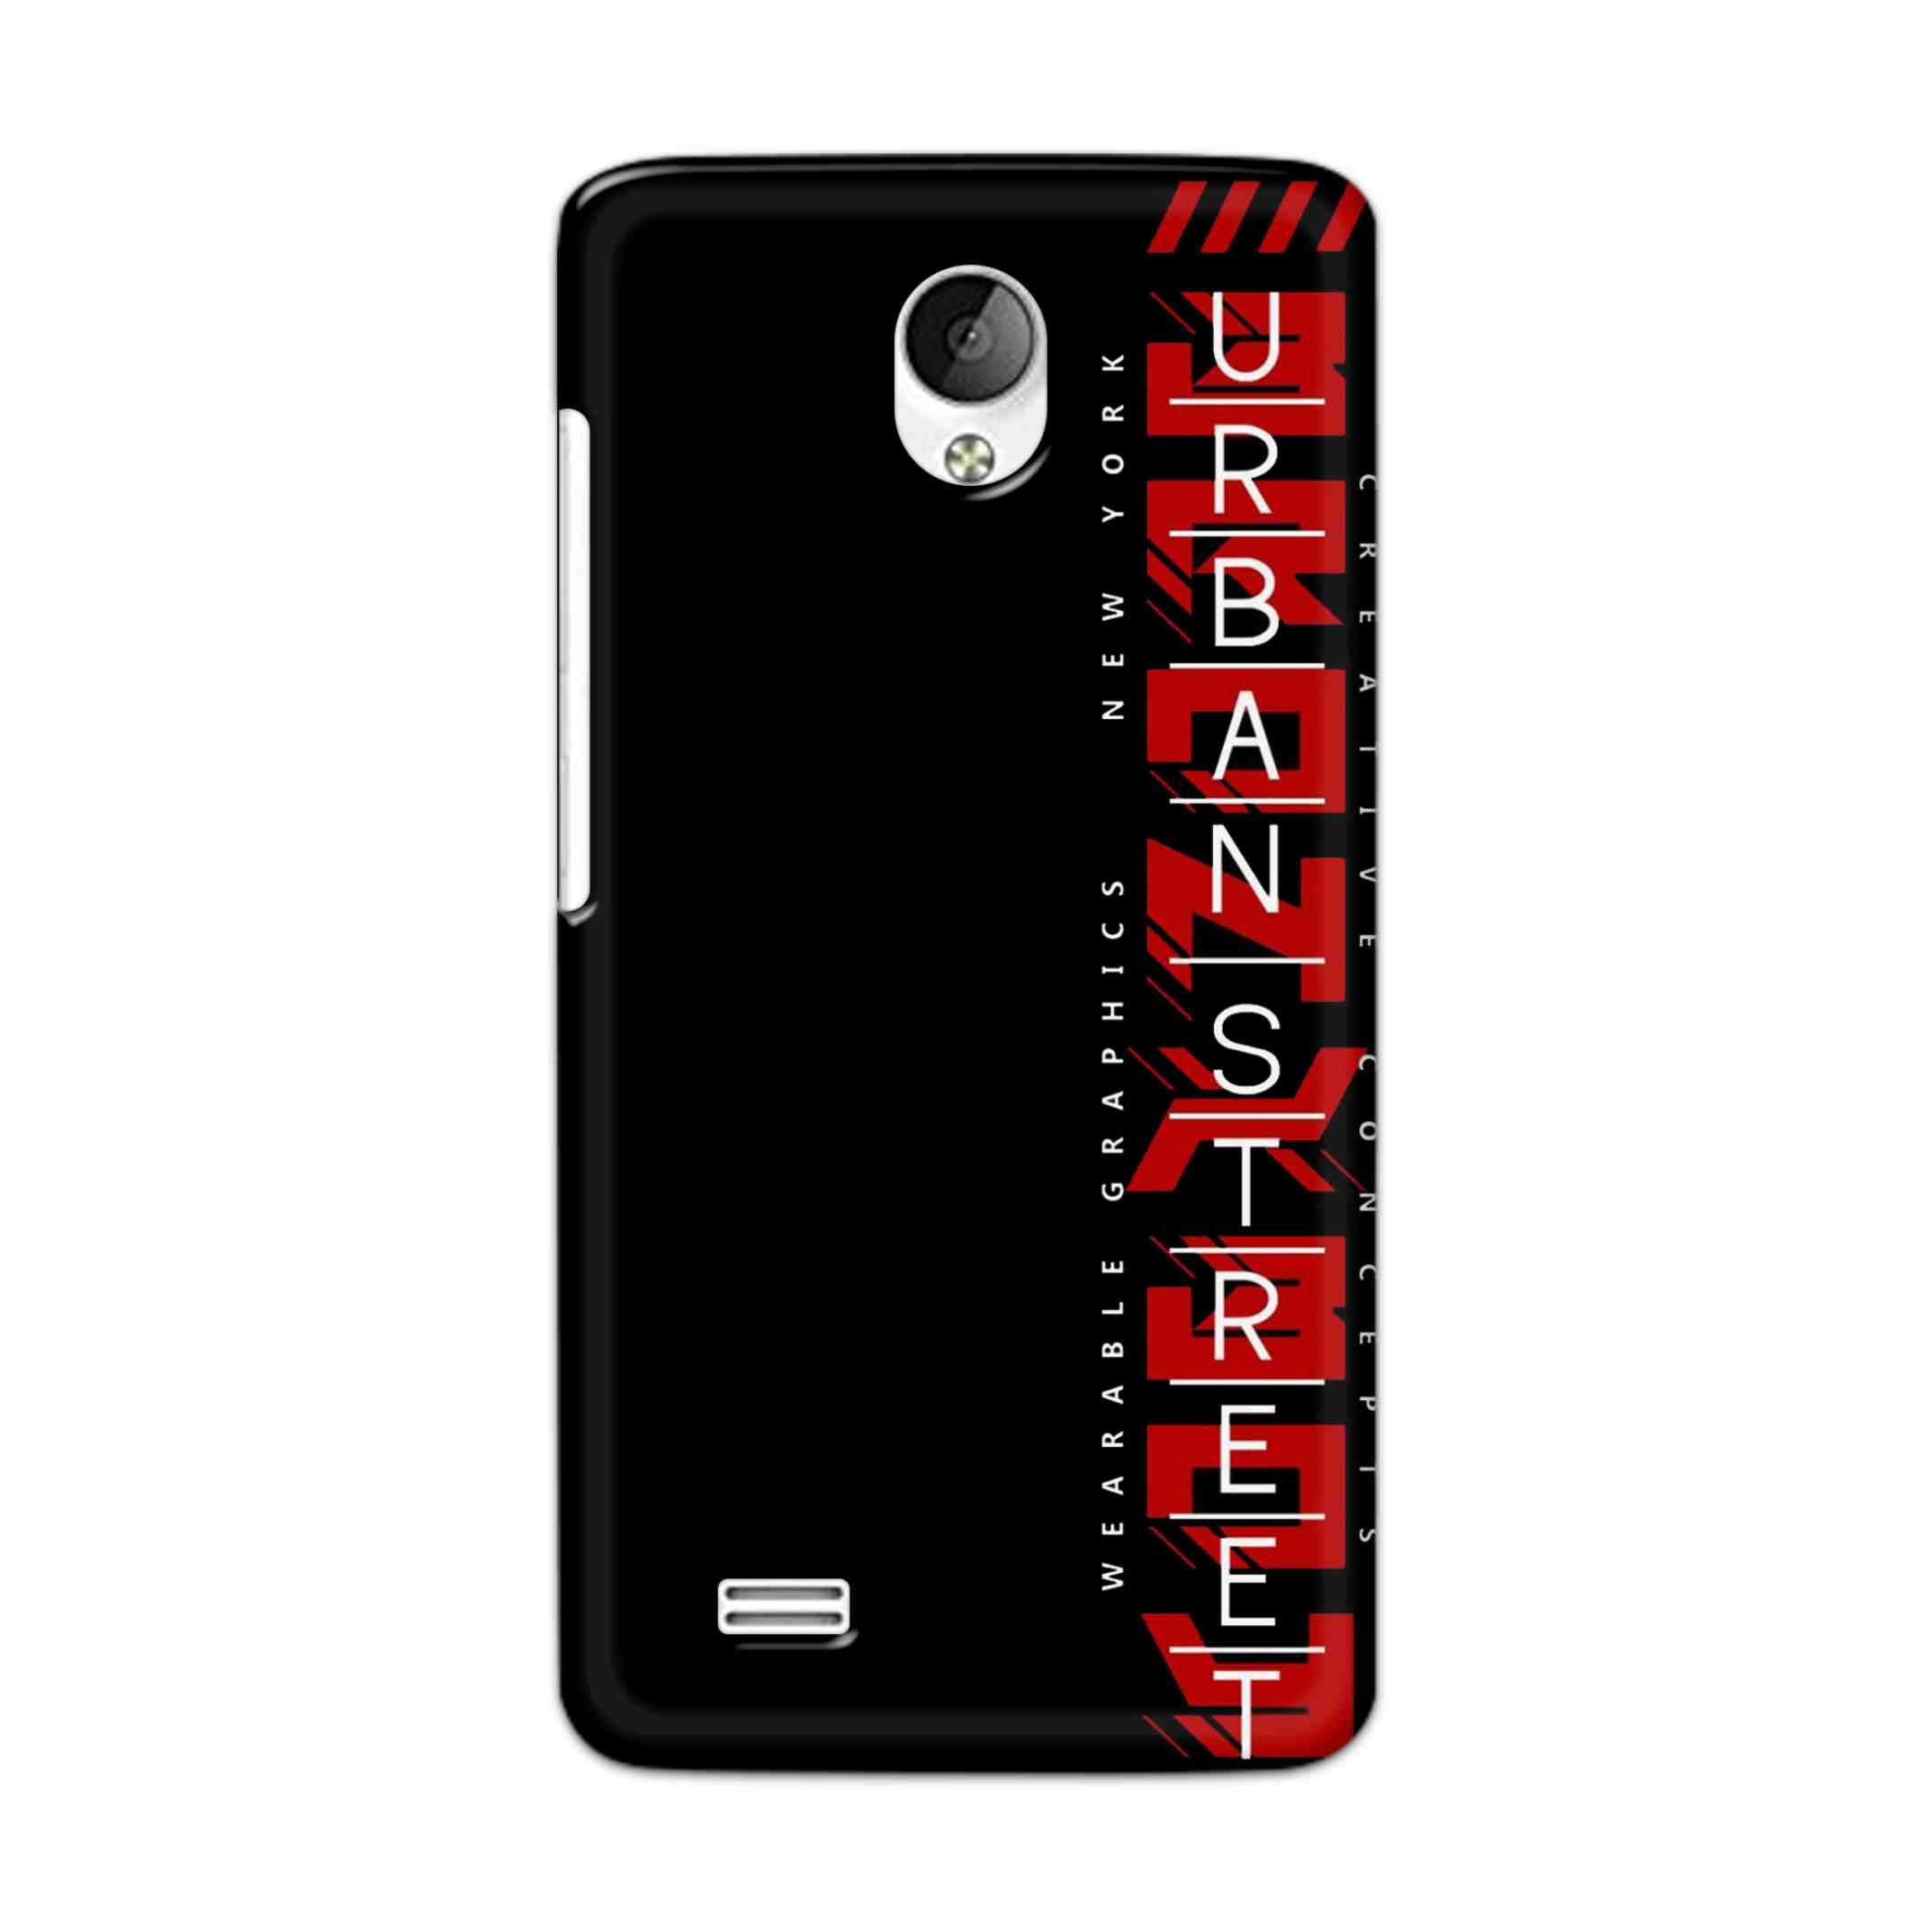 Buy Urban Street Hard Back Mobile Phone Case Cover For Vivo Y21 / Vivo Y21L Online